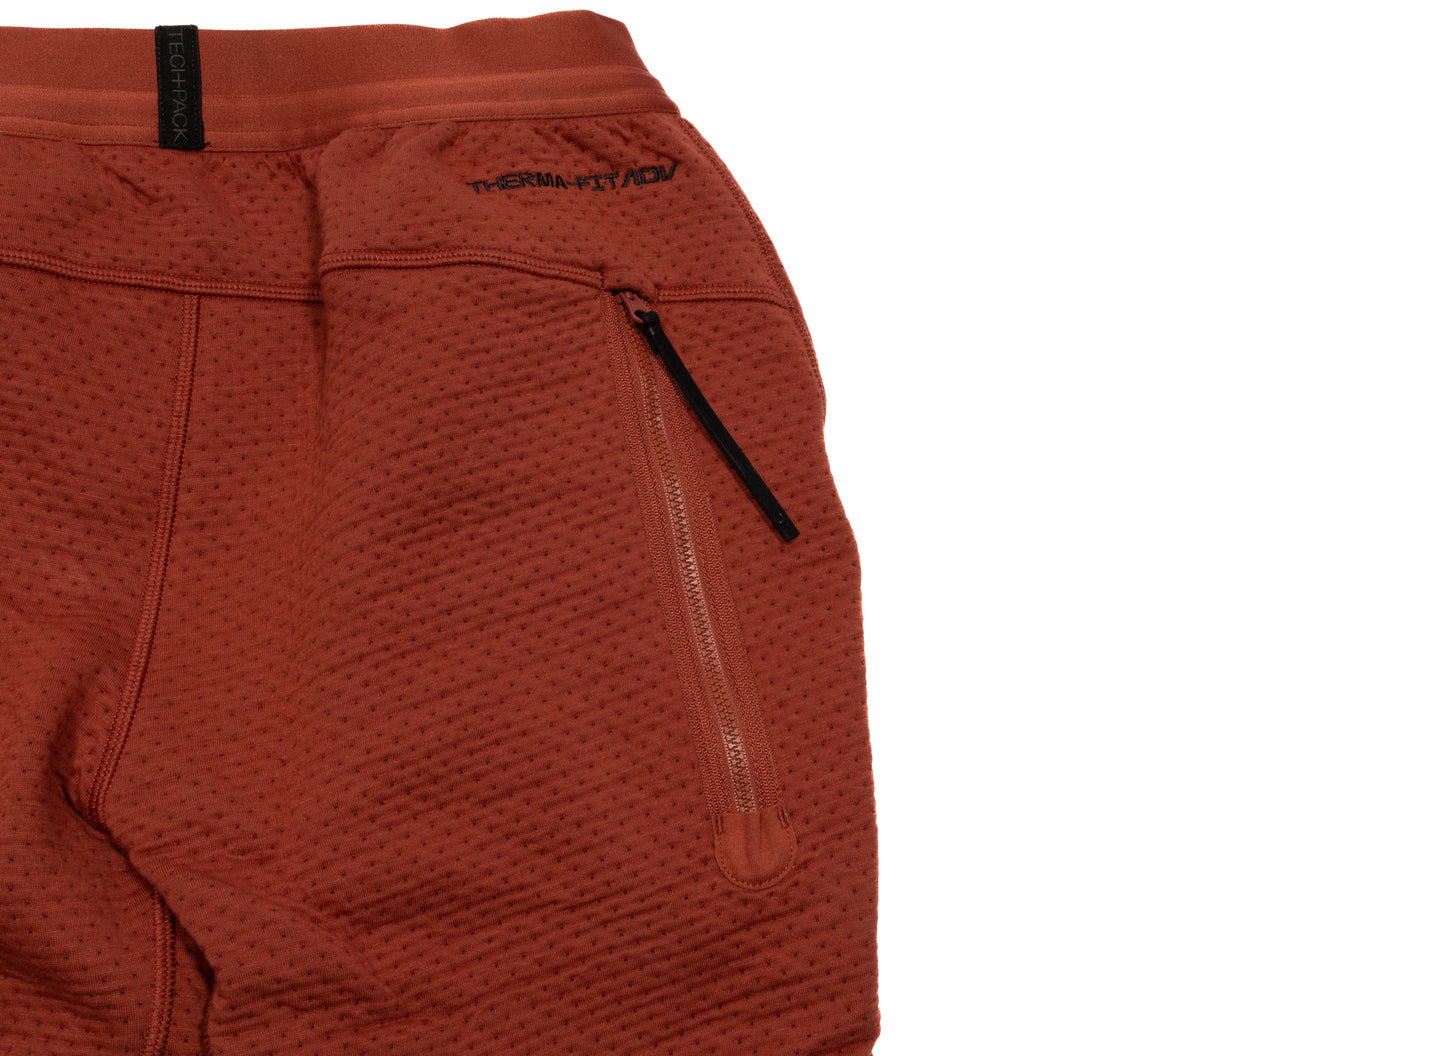 Nike Sportswear Therma-Fit ADV Tech Pack Pants